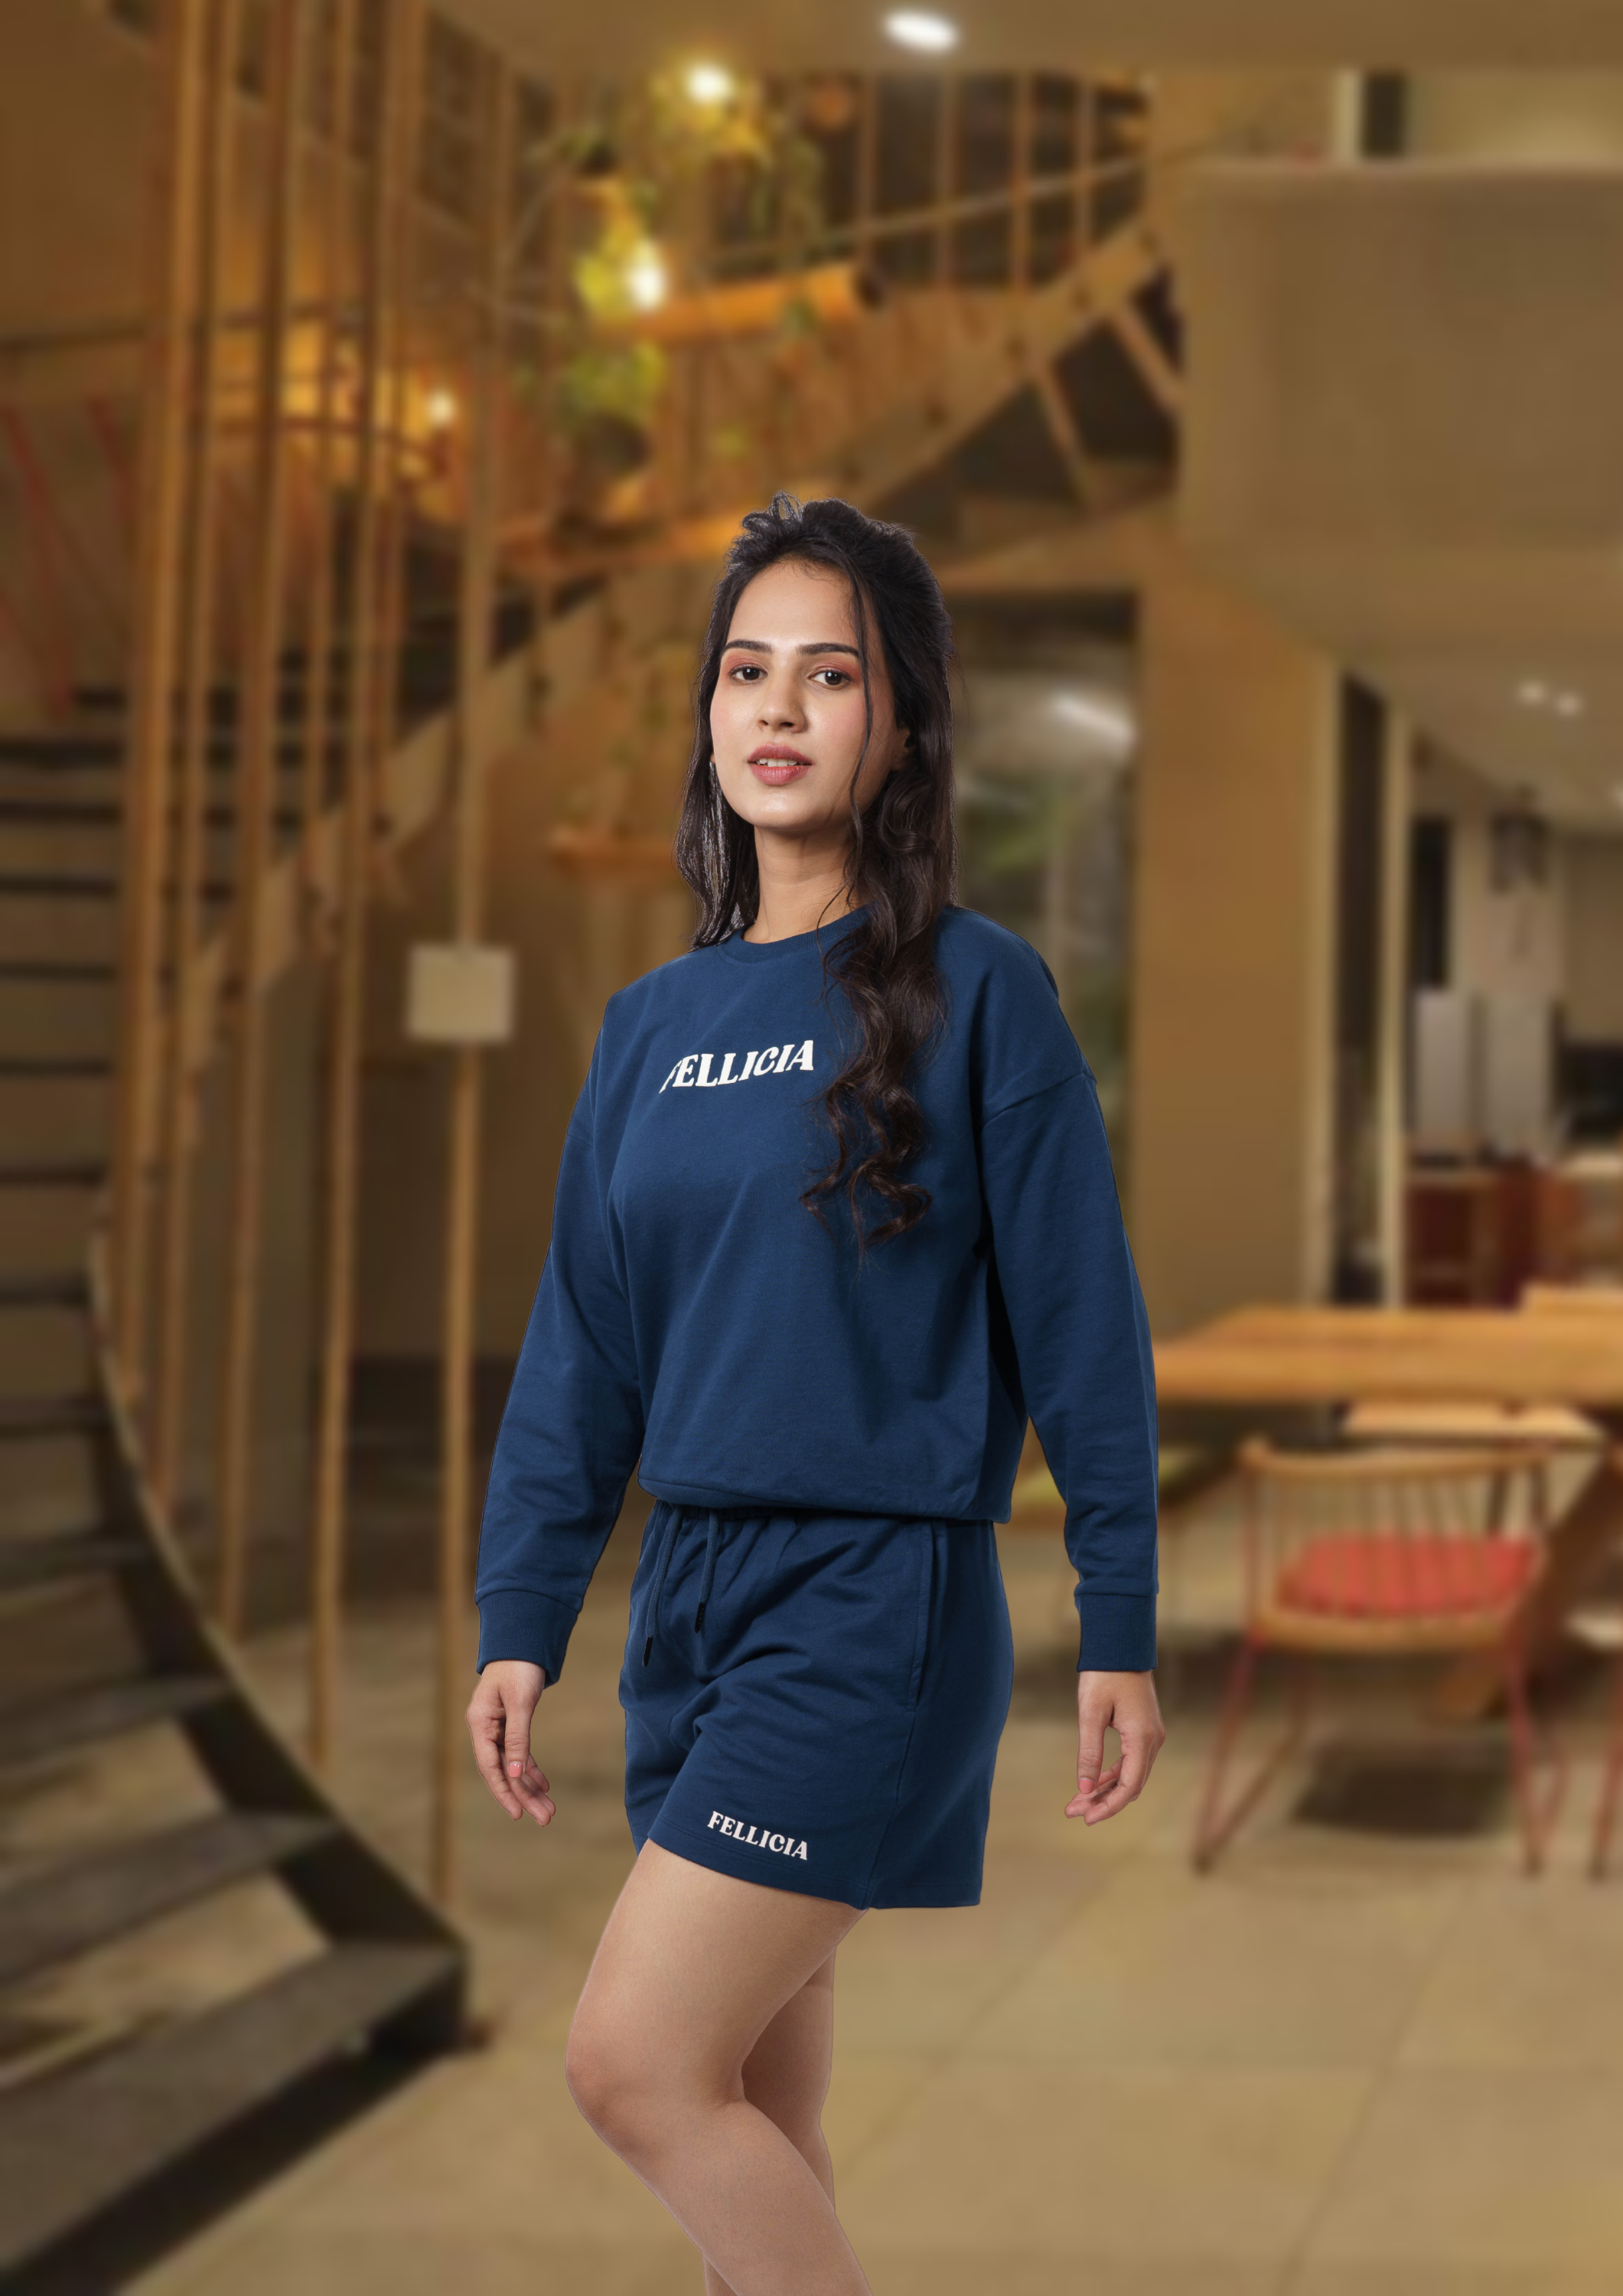 Women's Sweatshirt & Joggers Co-ord Set (Navy Blue) – FELLICIA